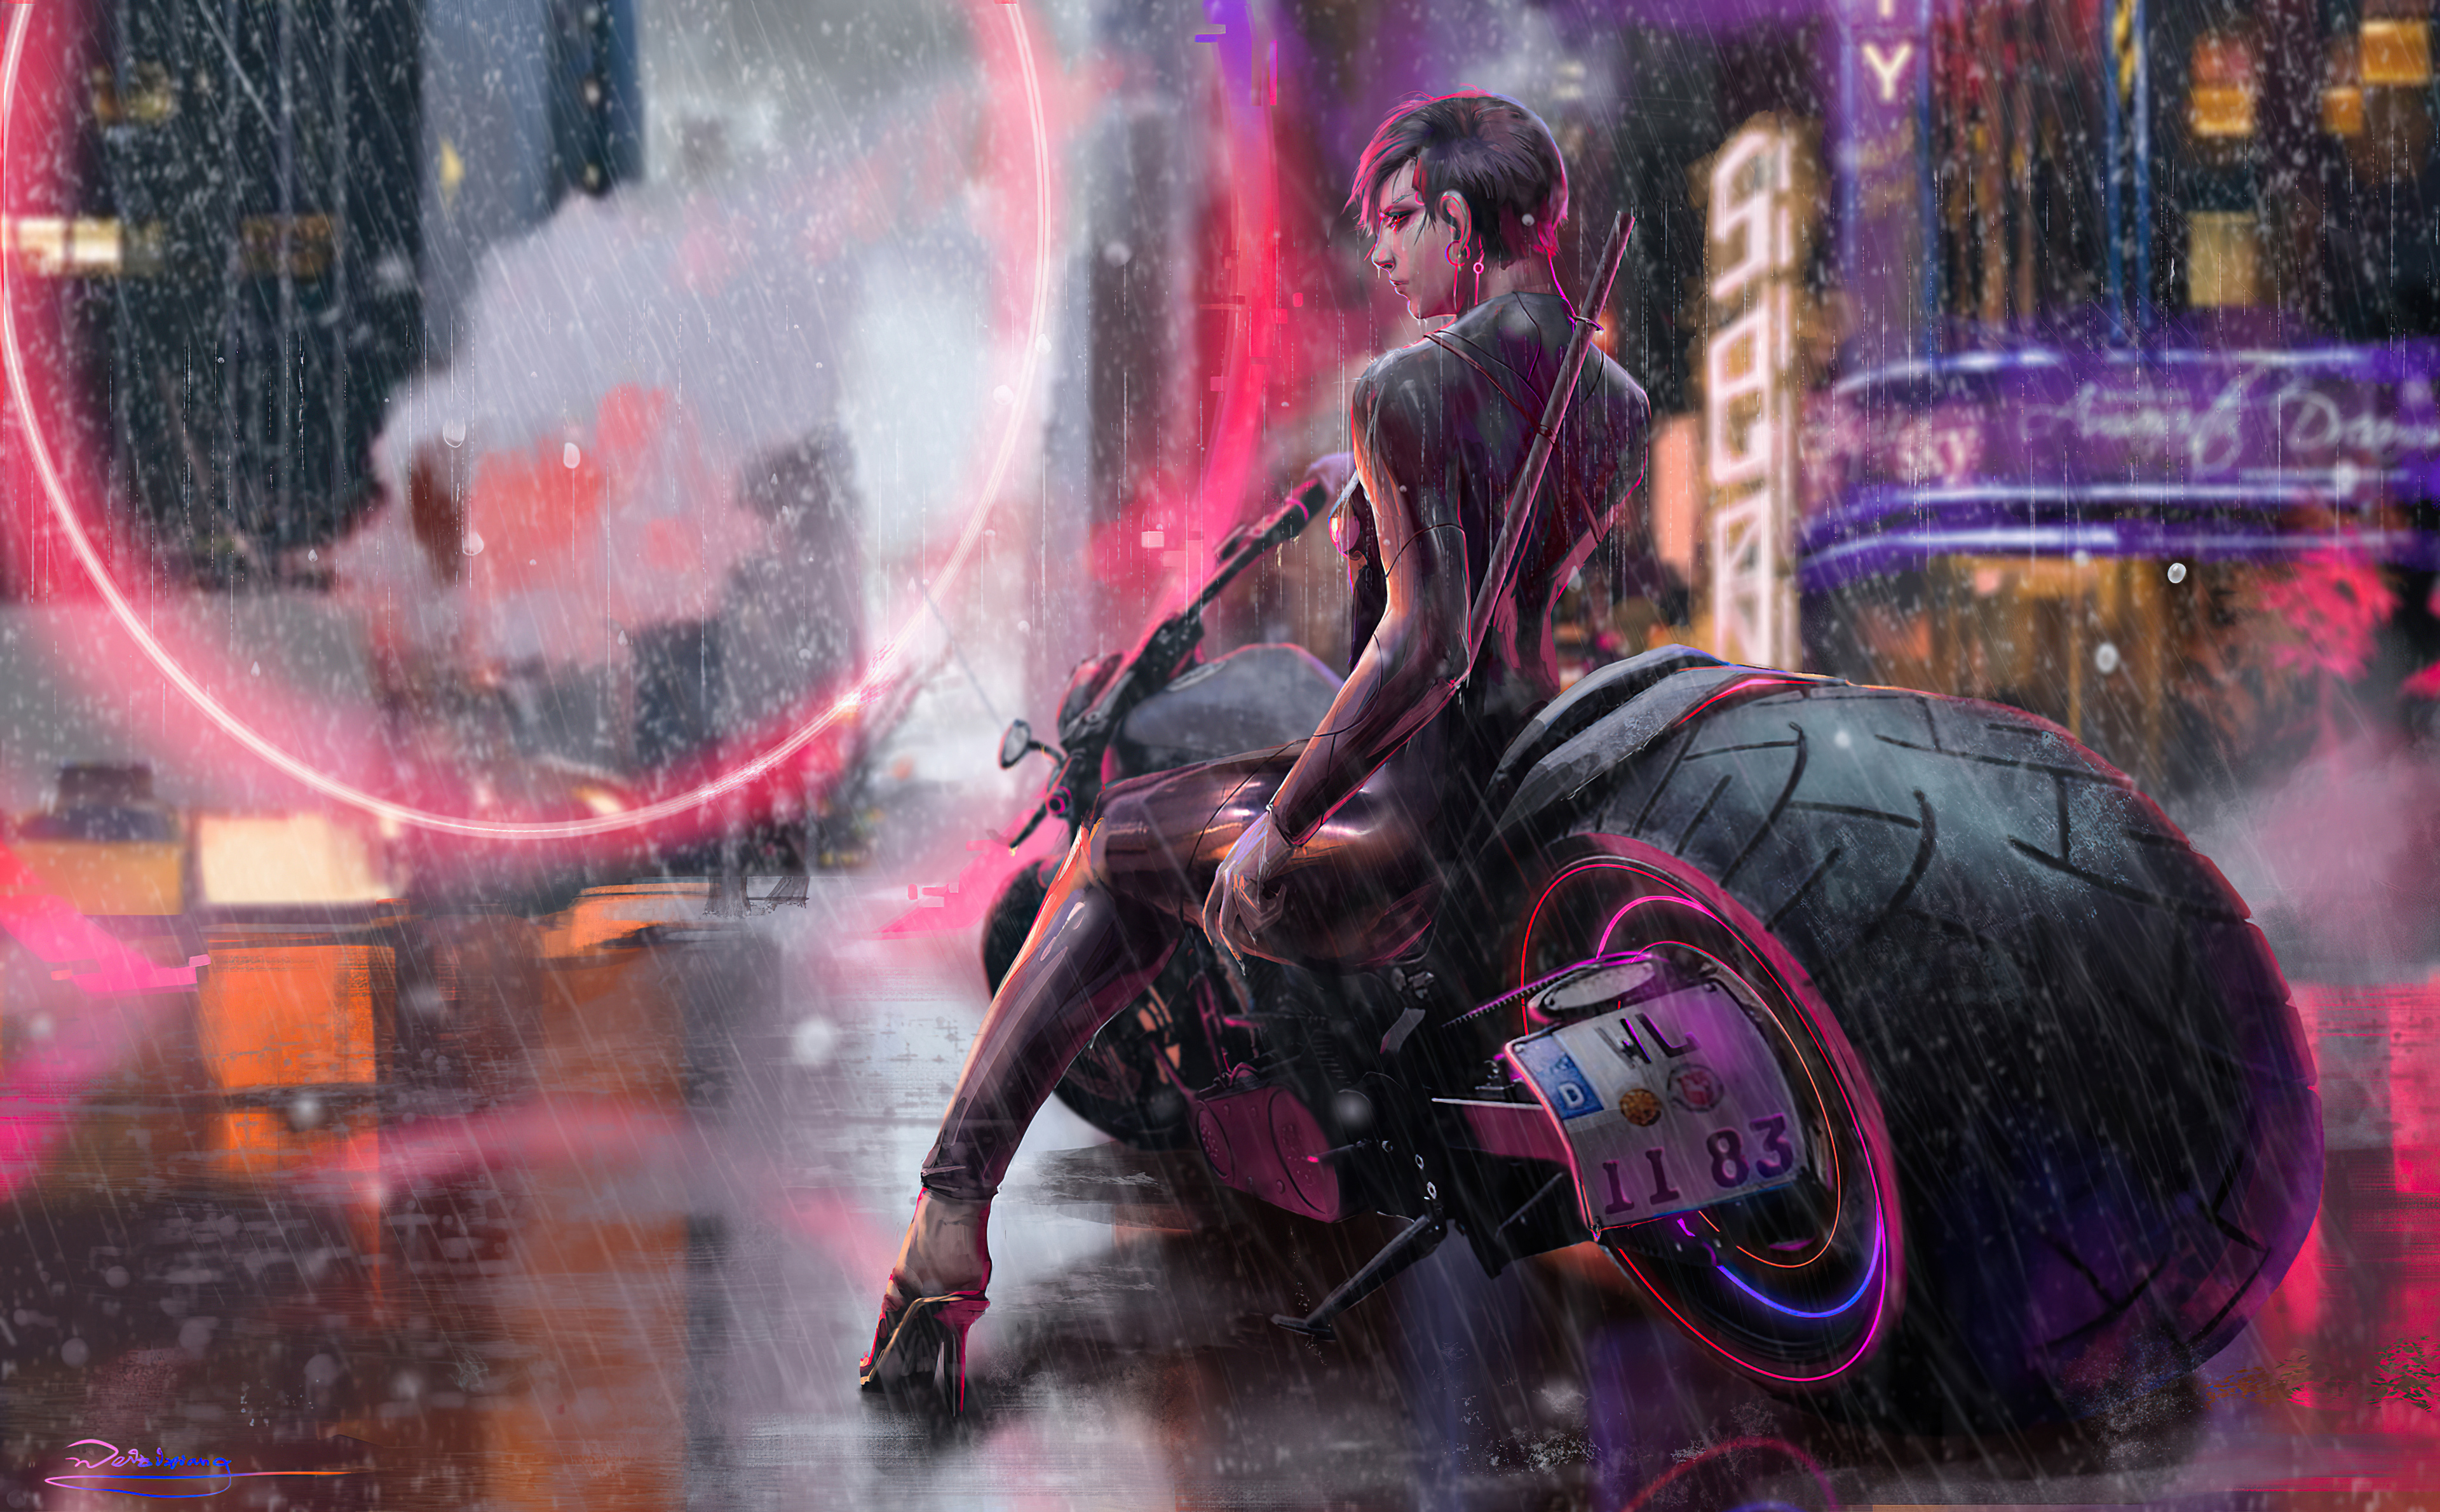 Cyberpunk Futuristic Girl Motorcycle Woman 3840x2380